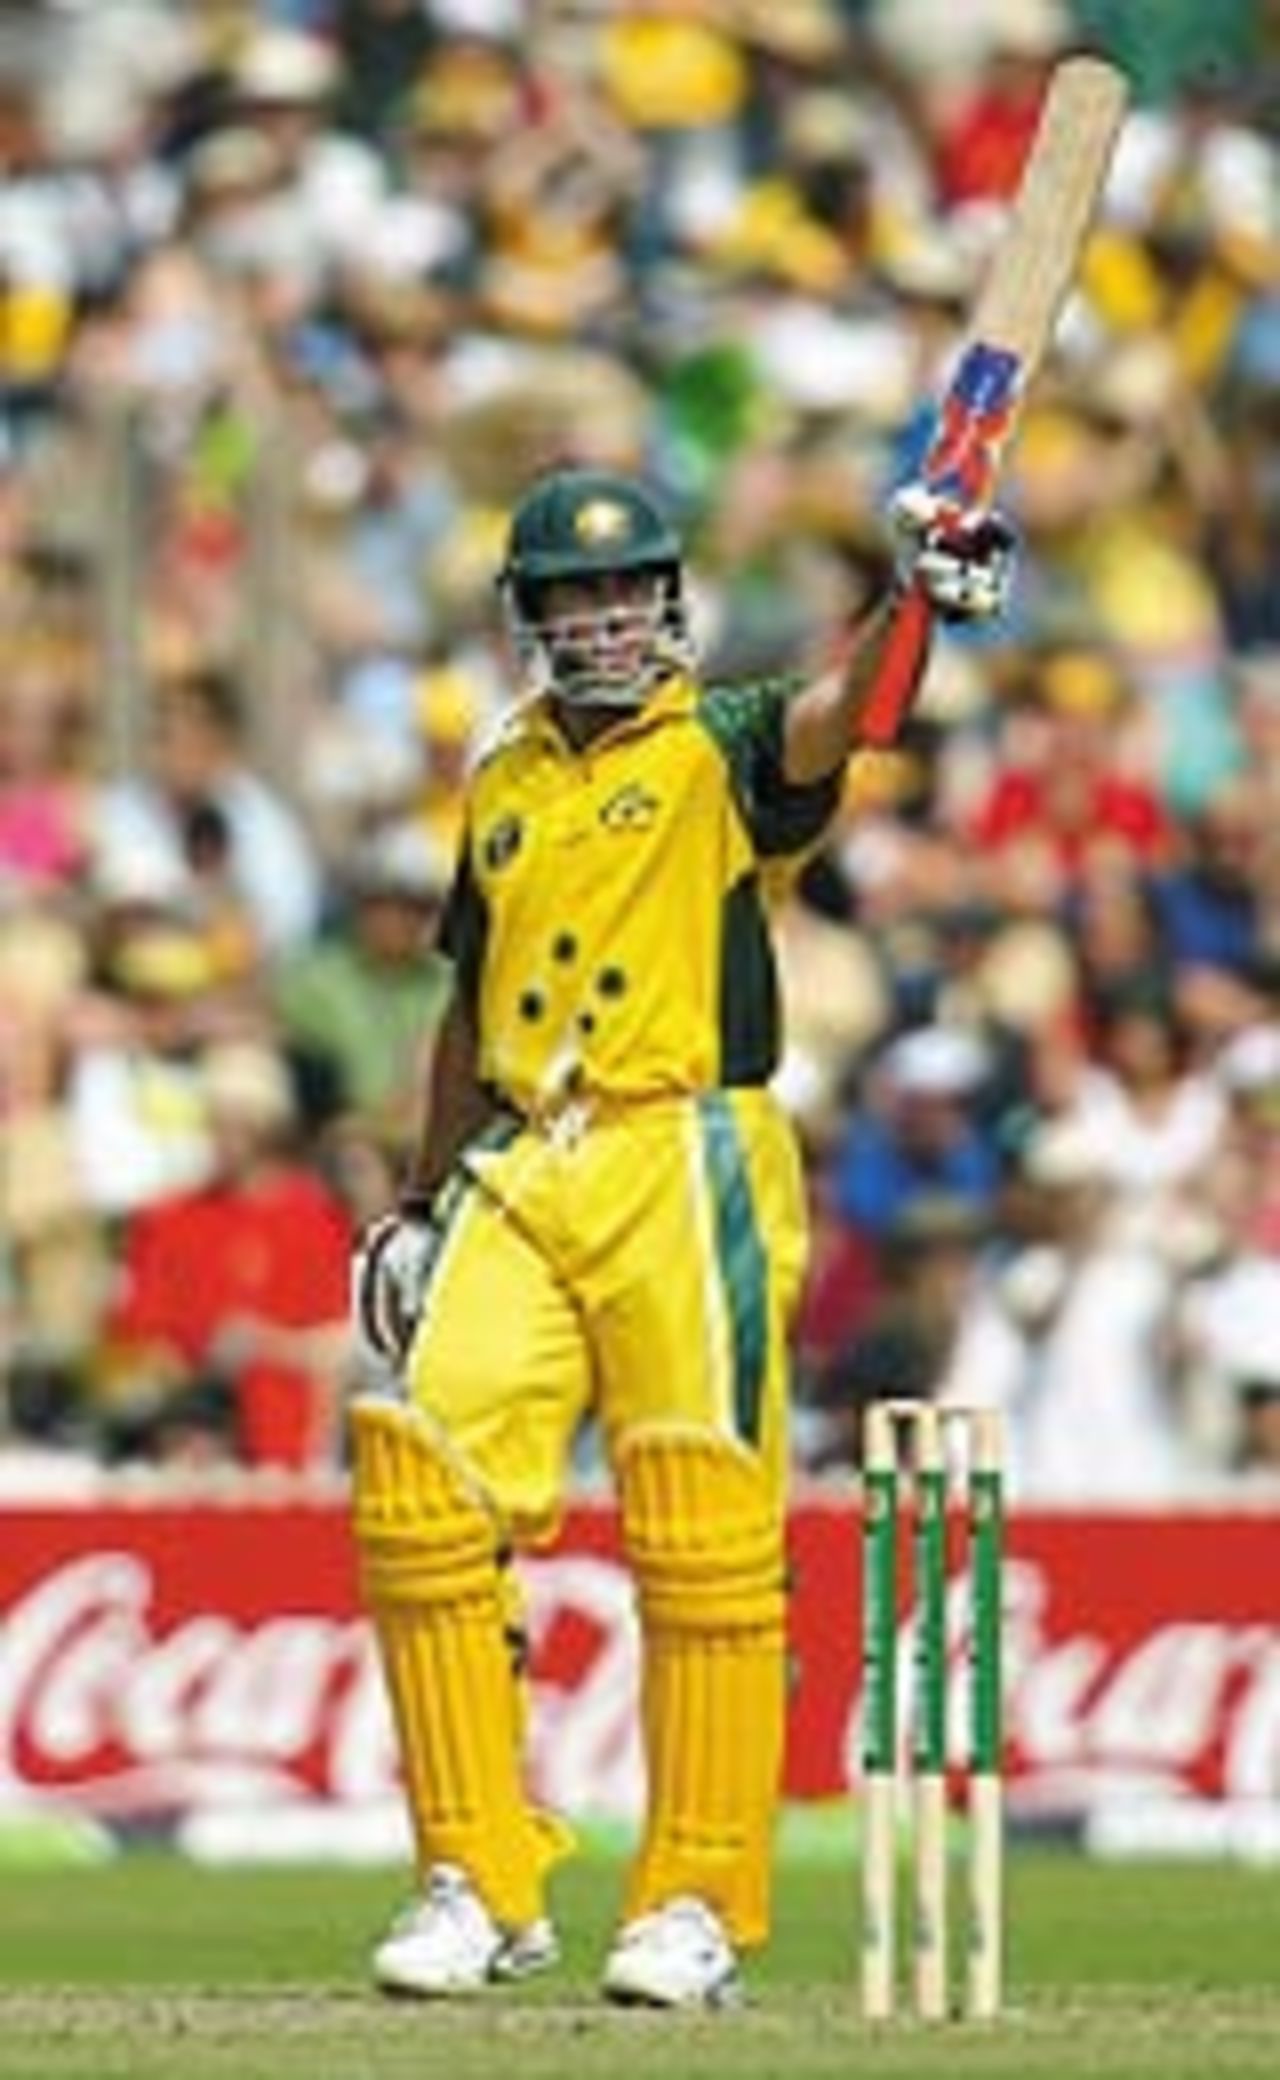 Michael Bevan raises his bat aloft after reaching his half-century, Australia v Zimbabwe, VB Series, 9th ODI, Adelaide, January 26, 2004